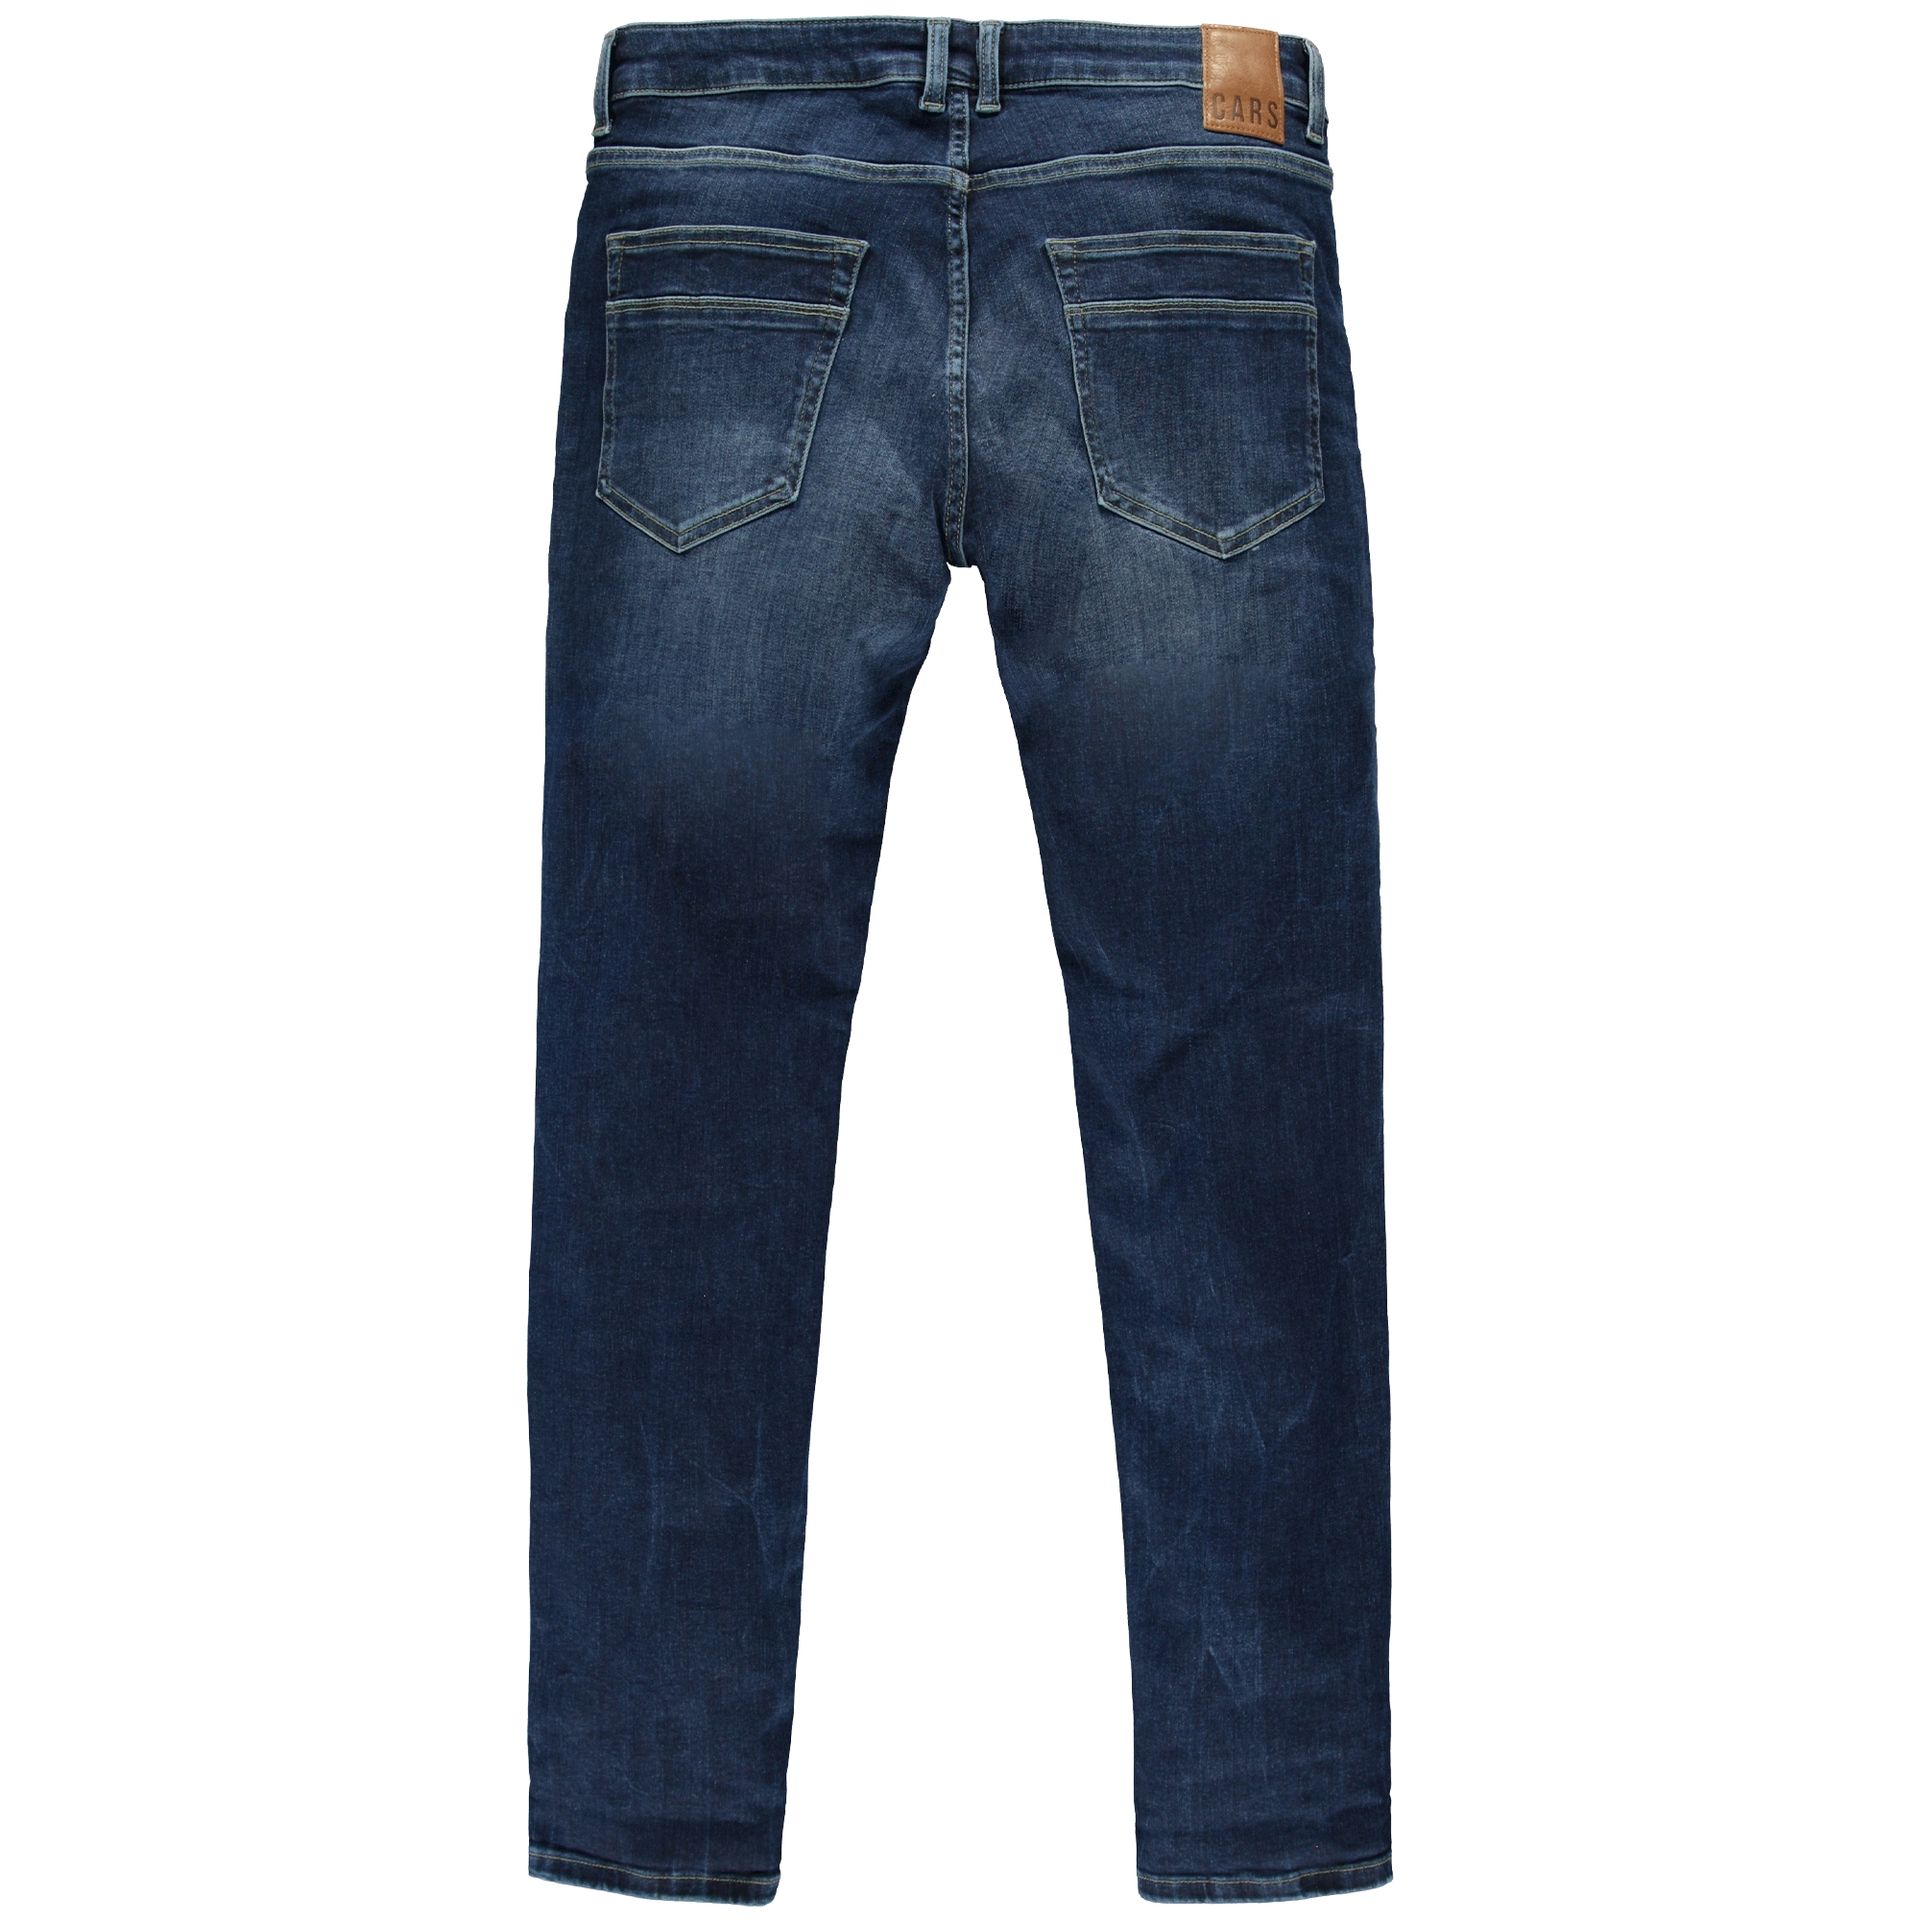 Cars jeans Jeans Bates Slim fit 03 dark used 00102503-EKA03000200000008